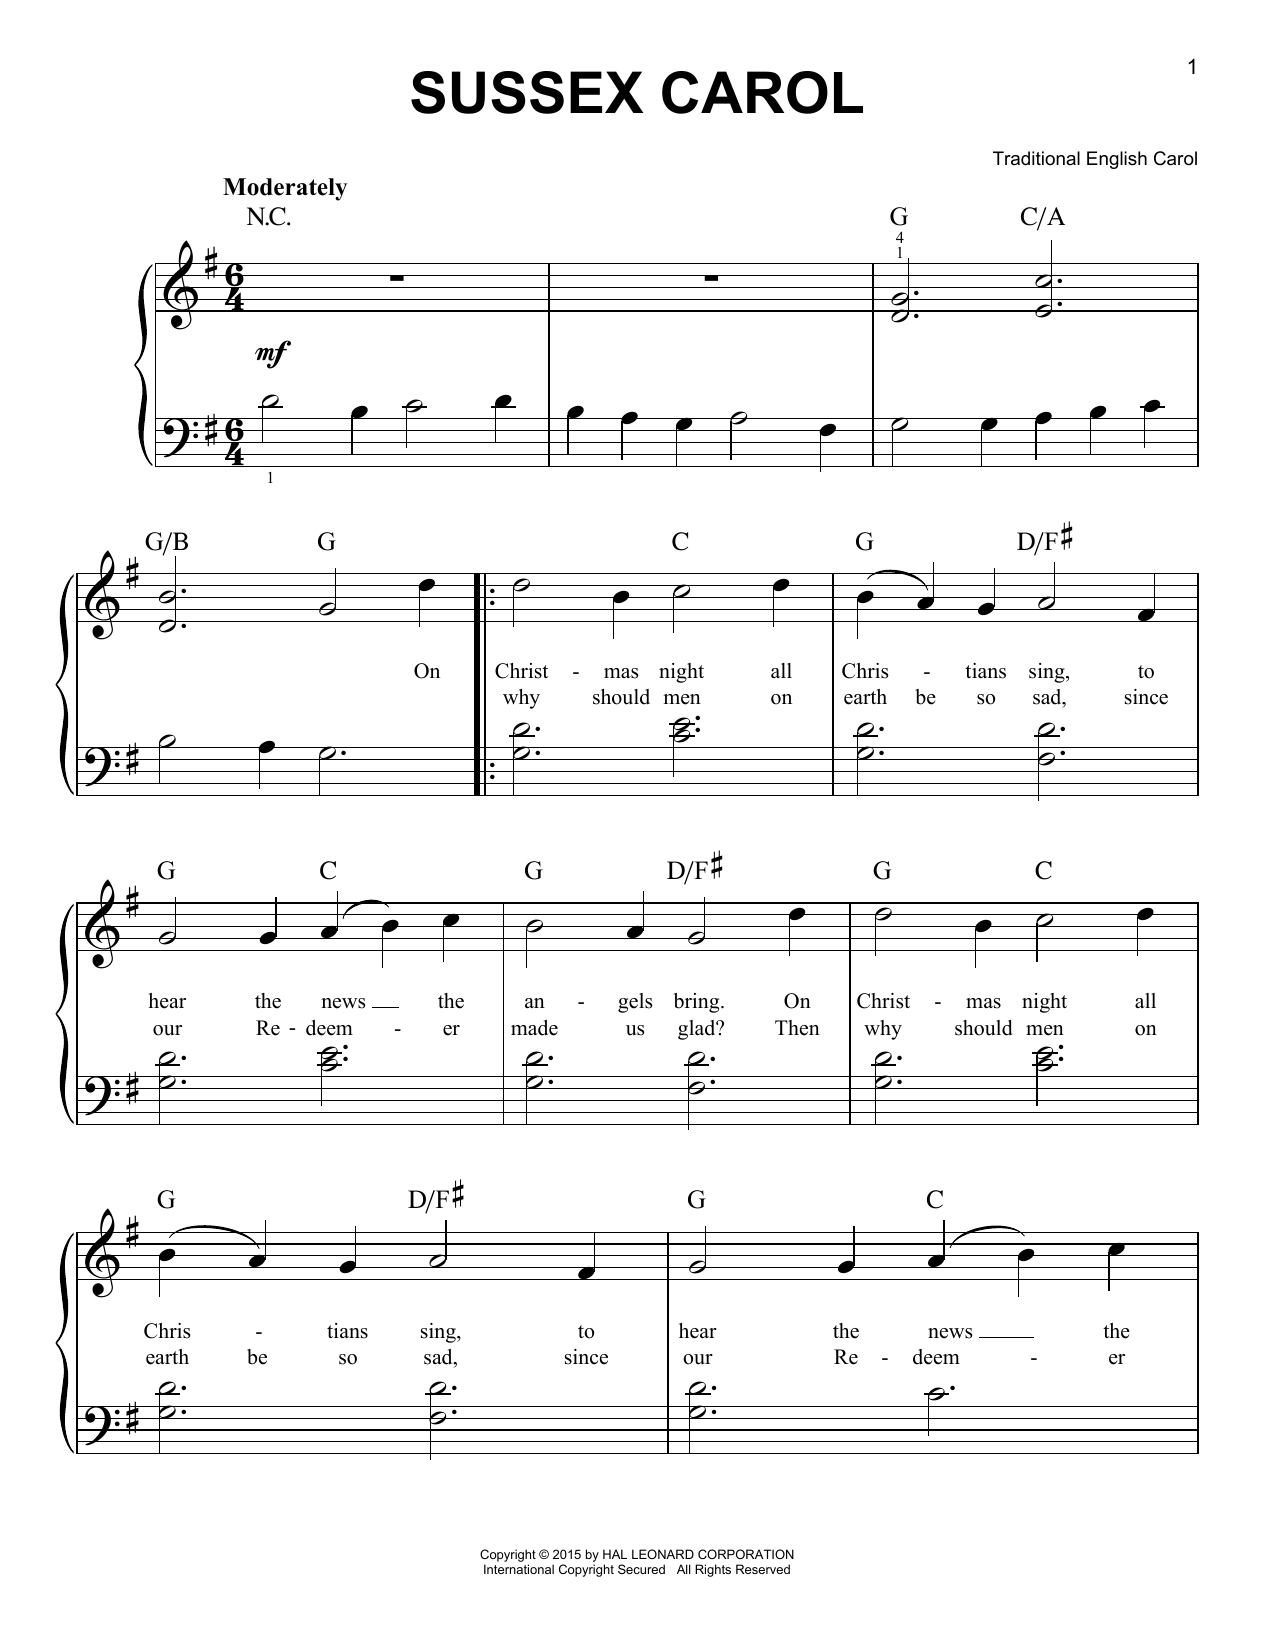 Christmas Carol Sussex Carol Sheet Music Notes & Chords for Lyrics & Chords - Download or Print PDF